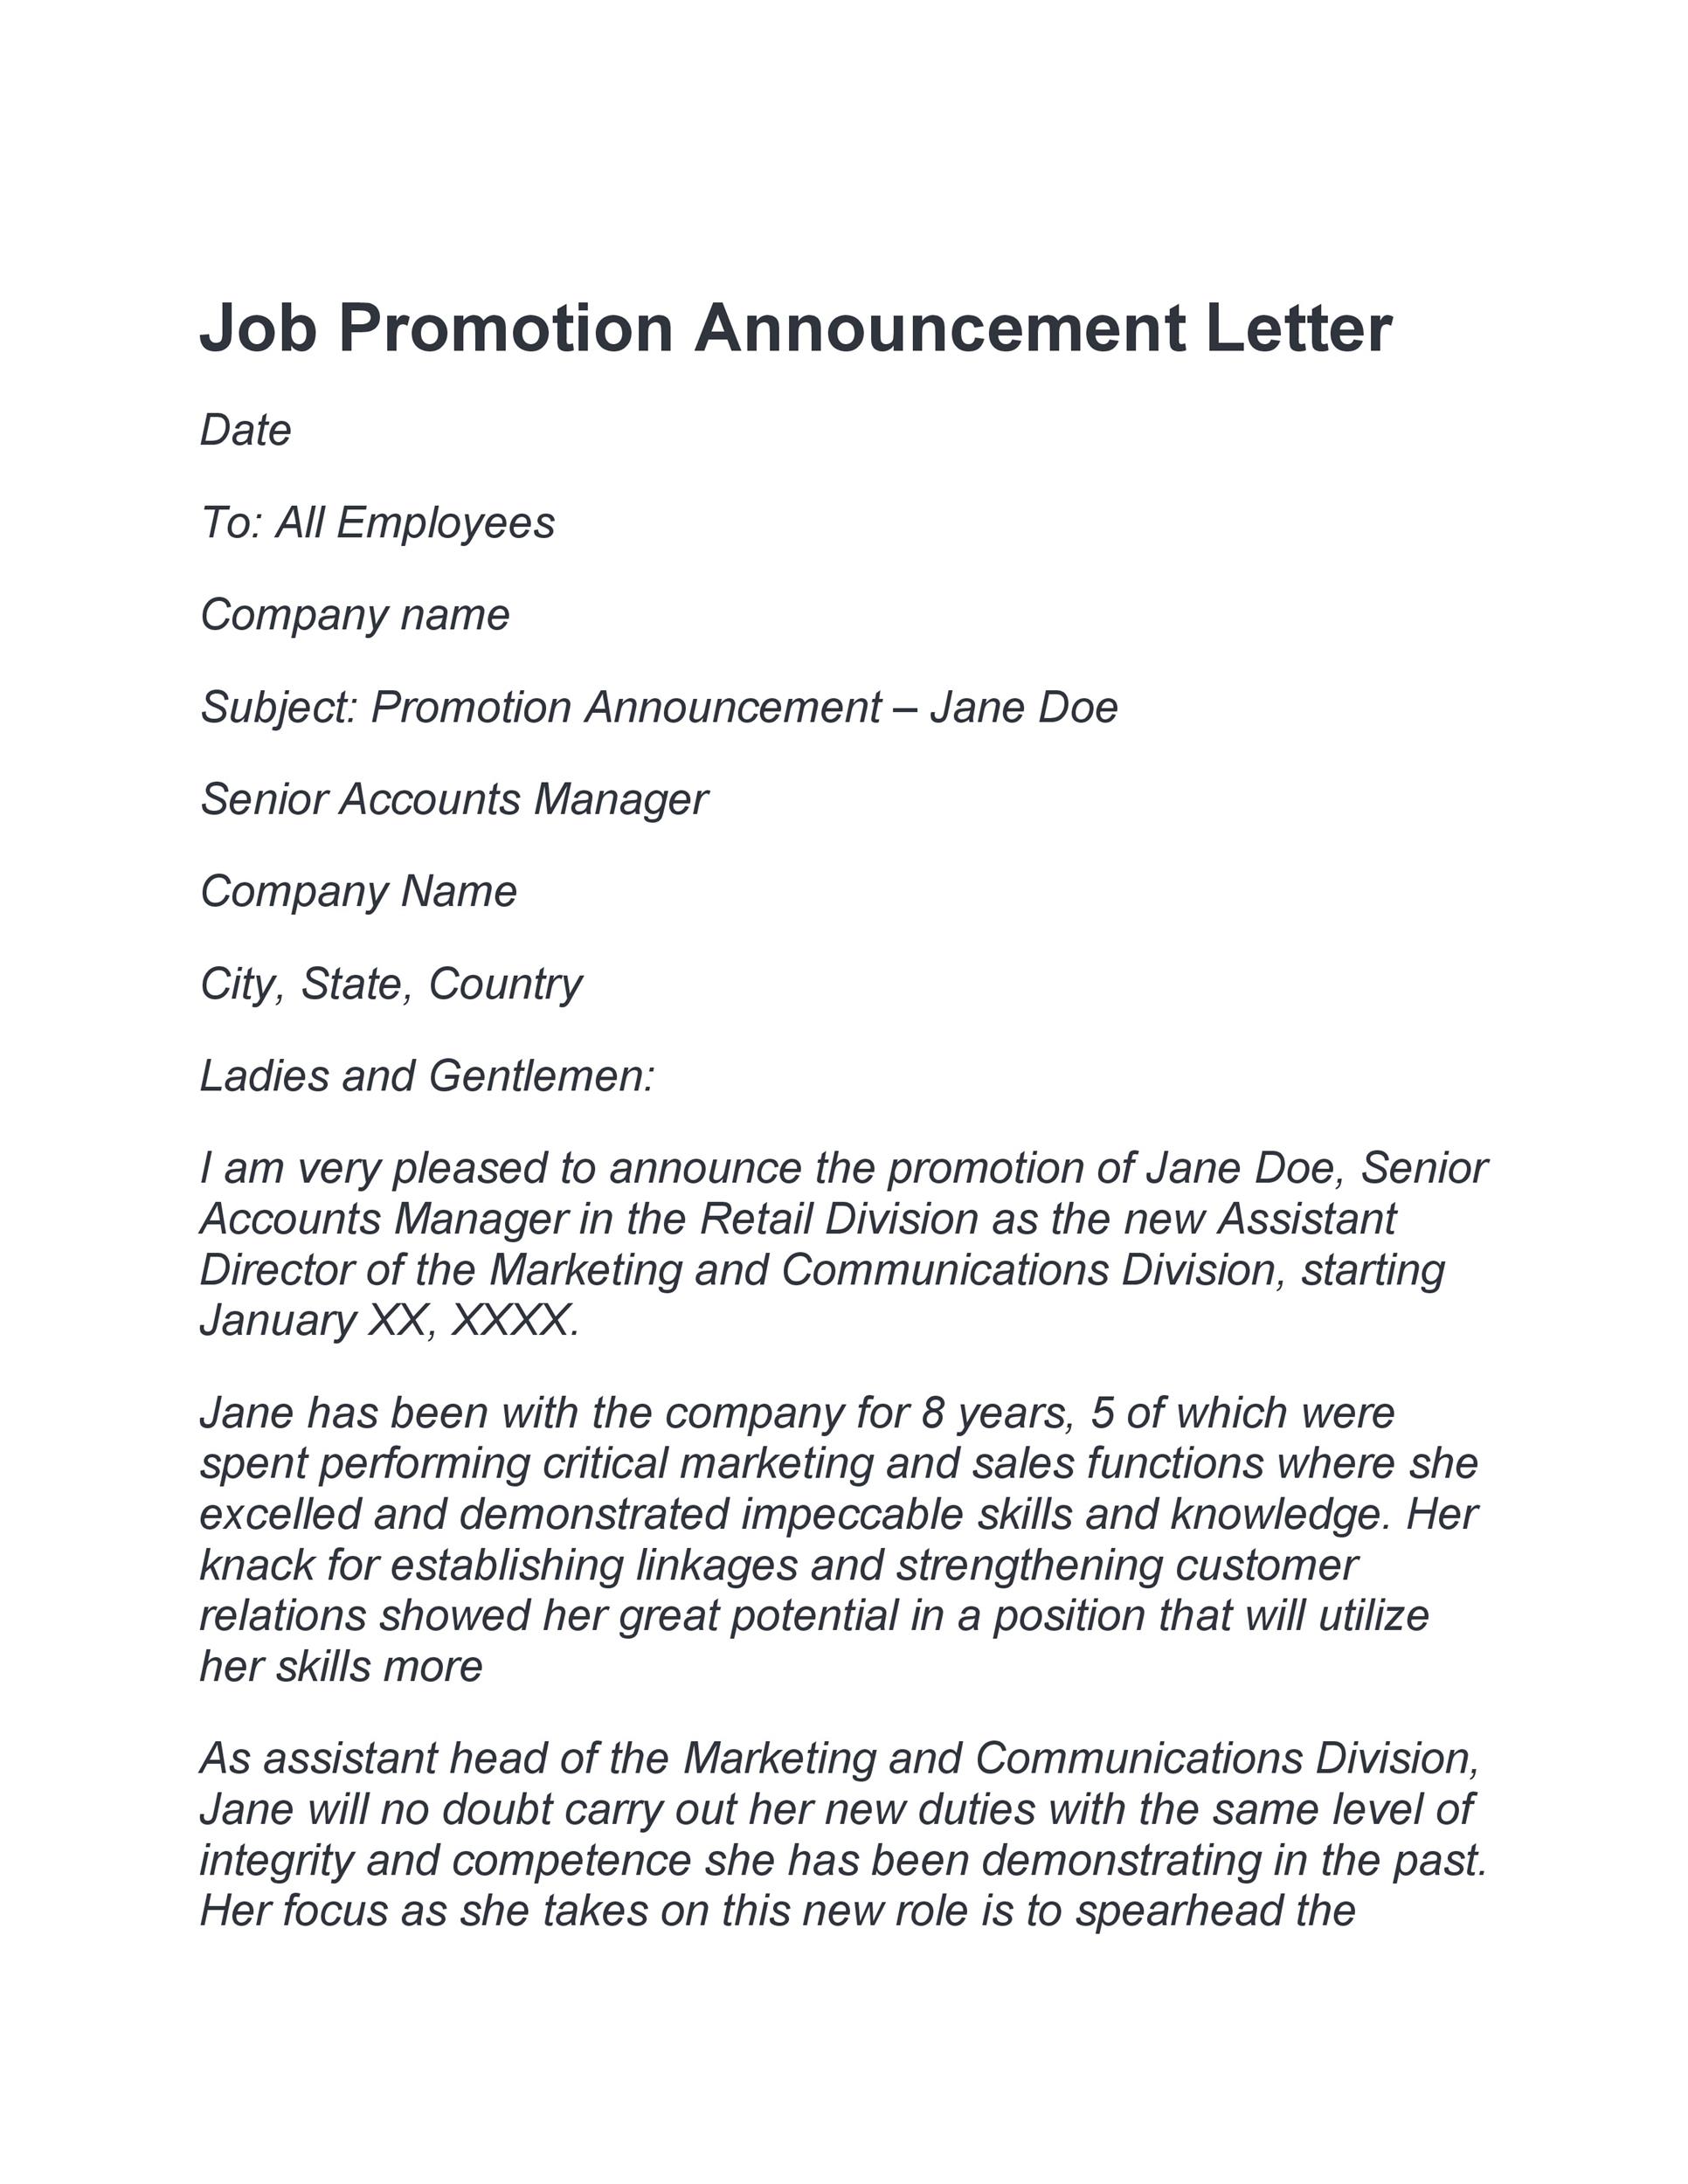 application letter of promotion